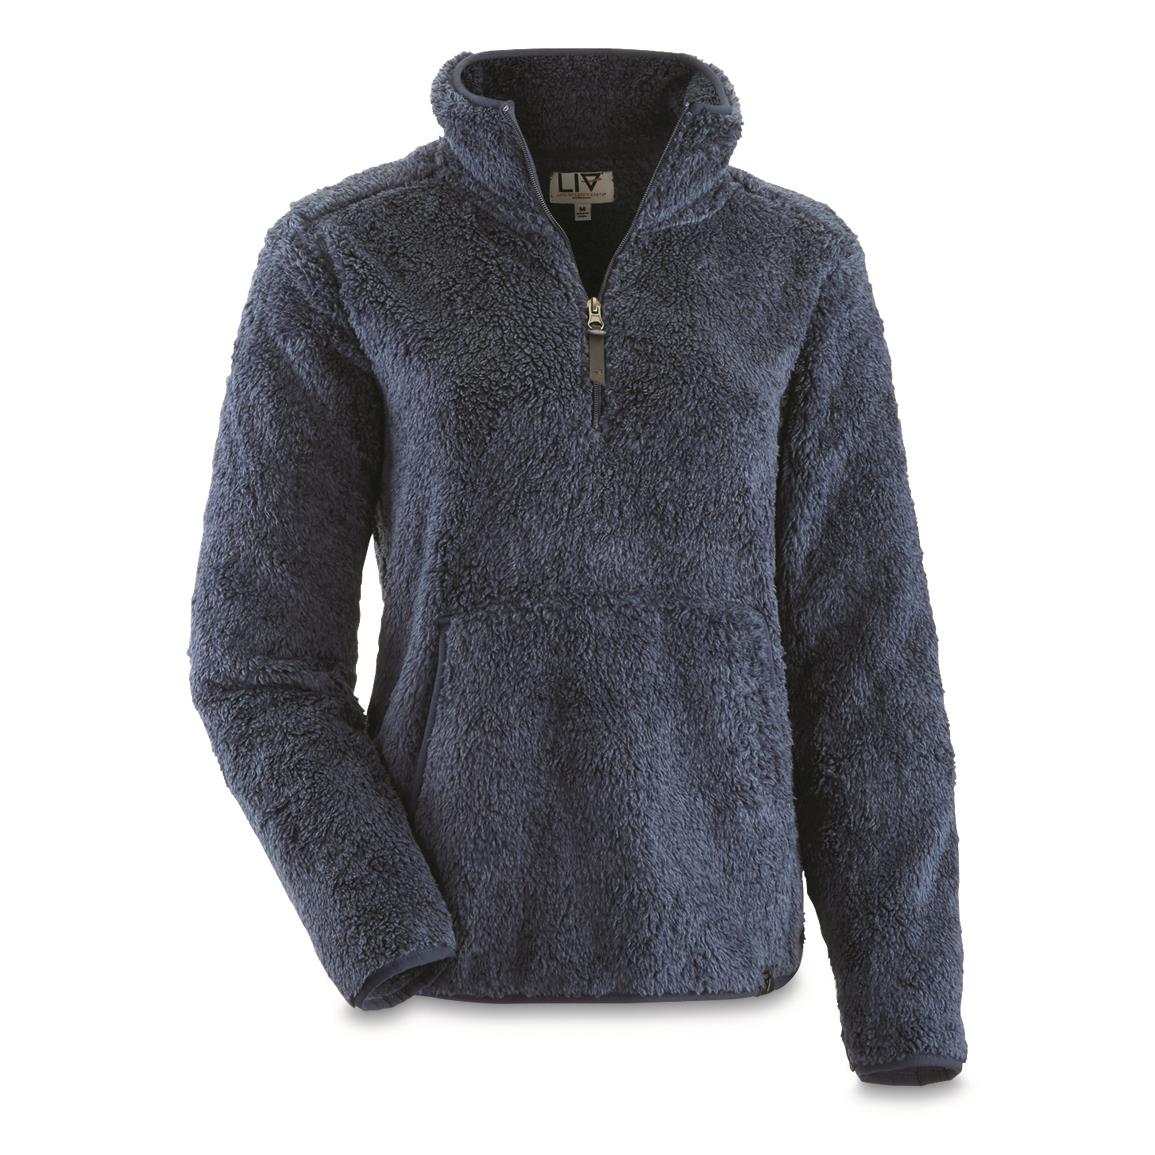 LIV Outdoor Women's Celesta Sherpa Pullover Sweater, Indigo/vintage Indigo